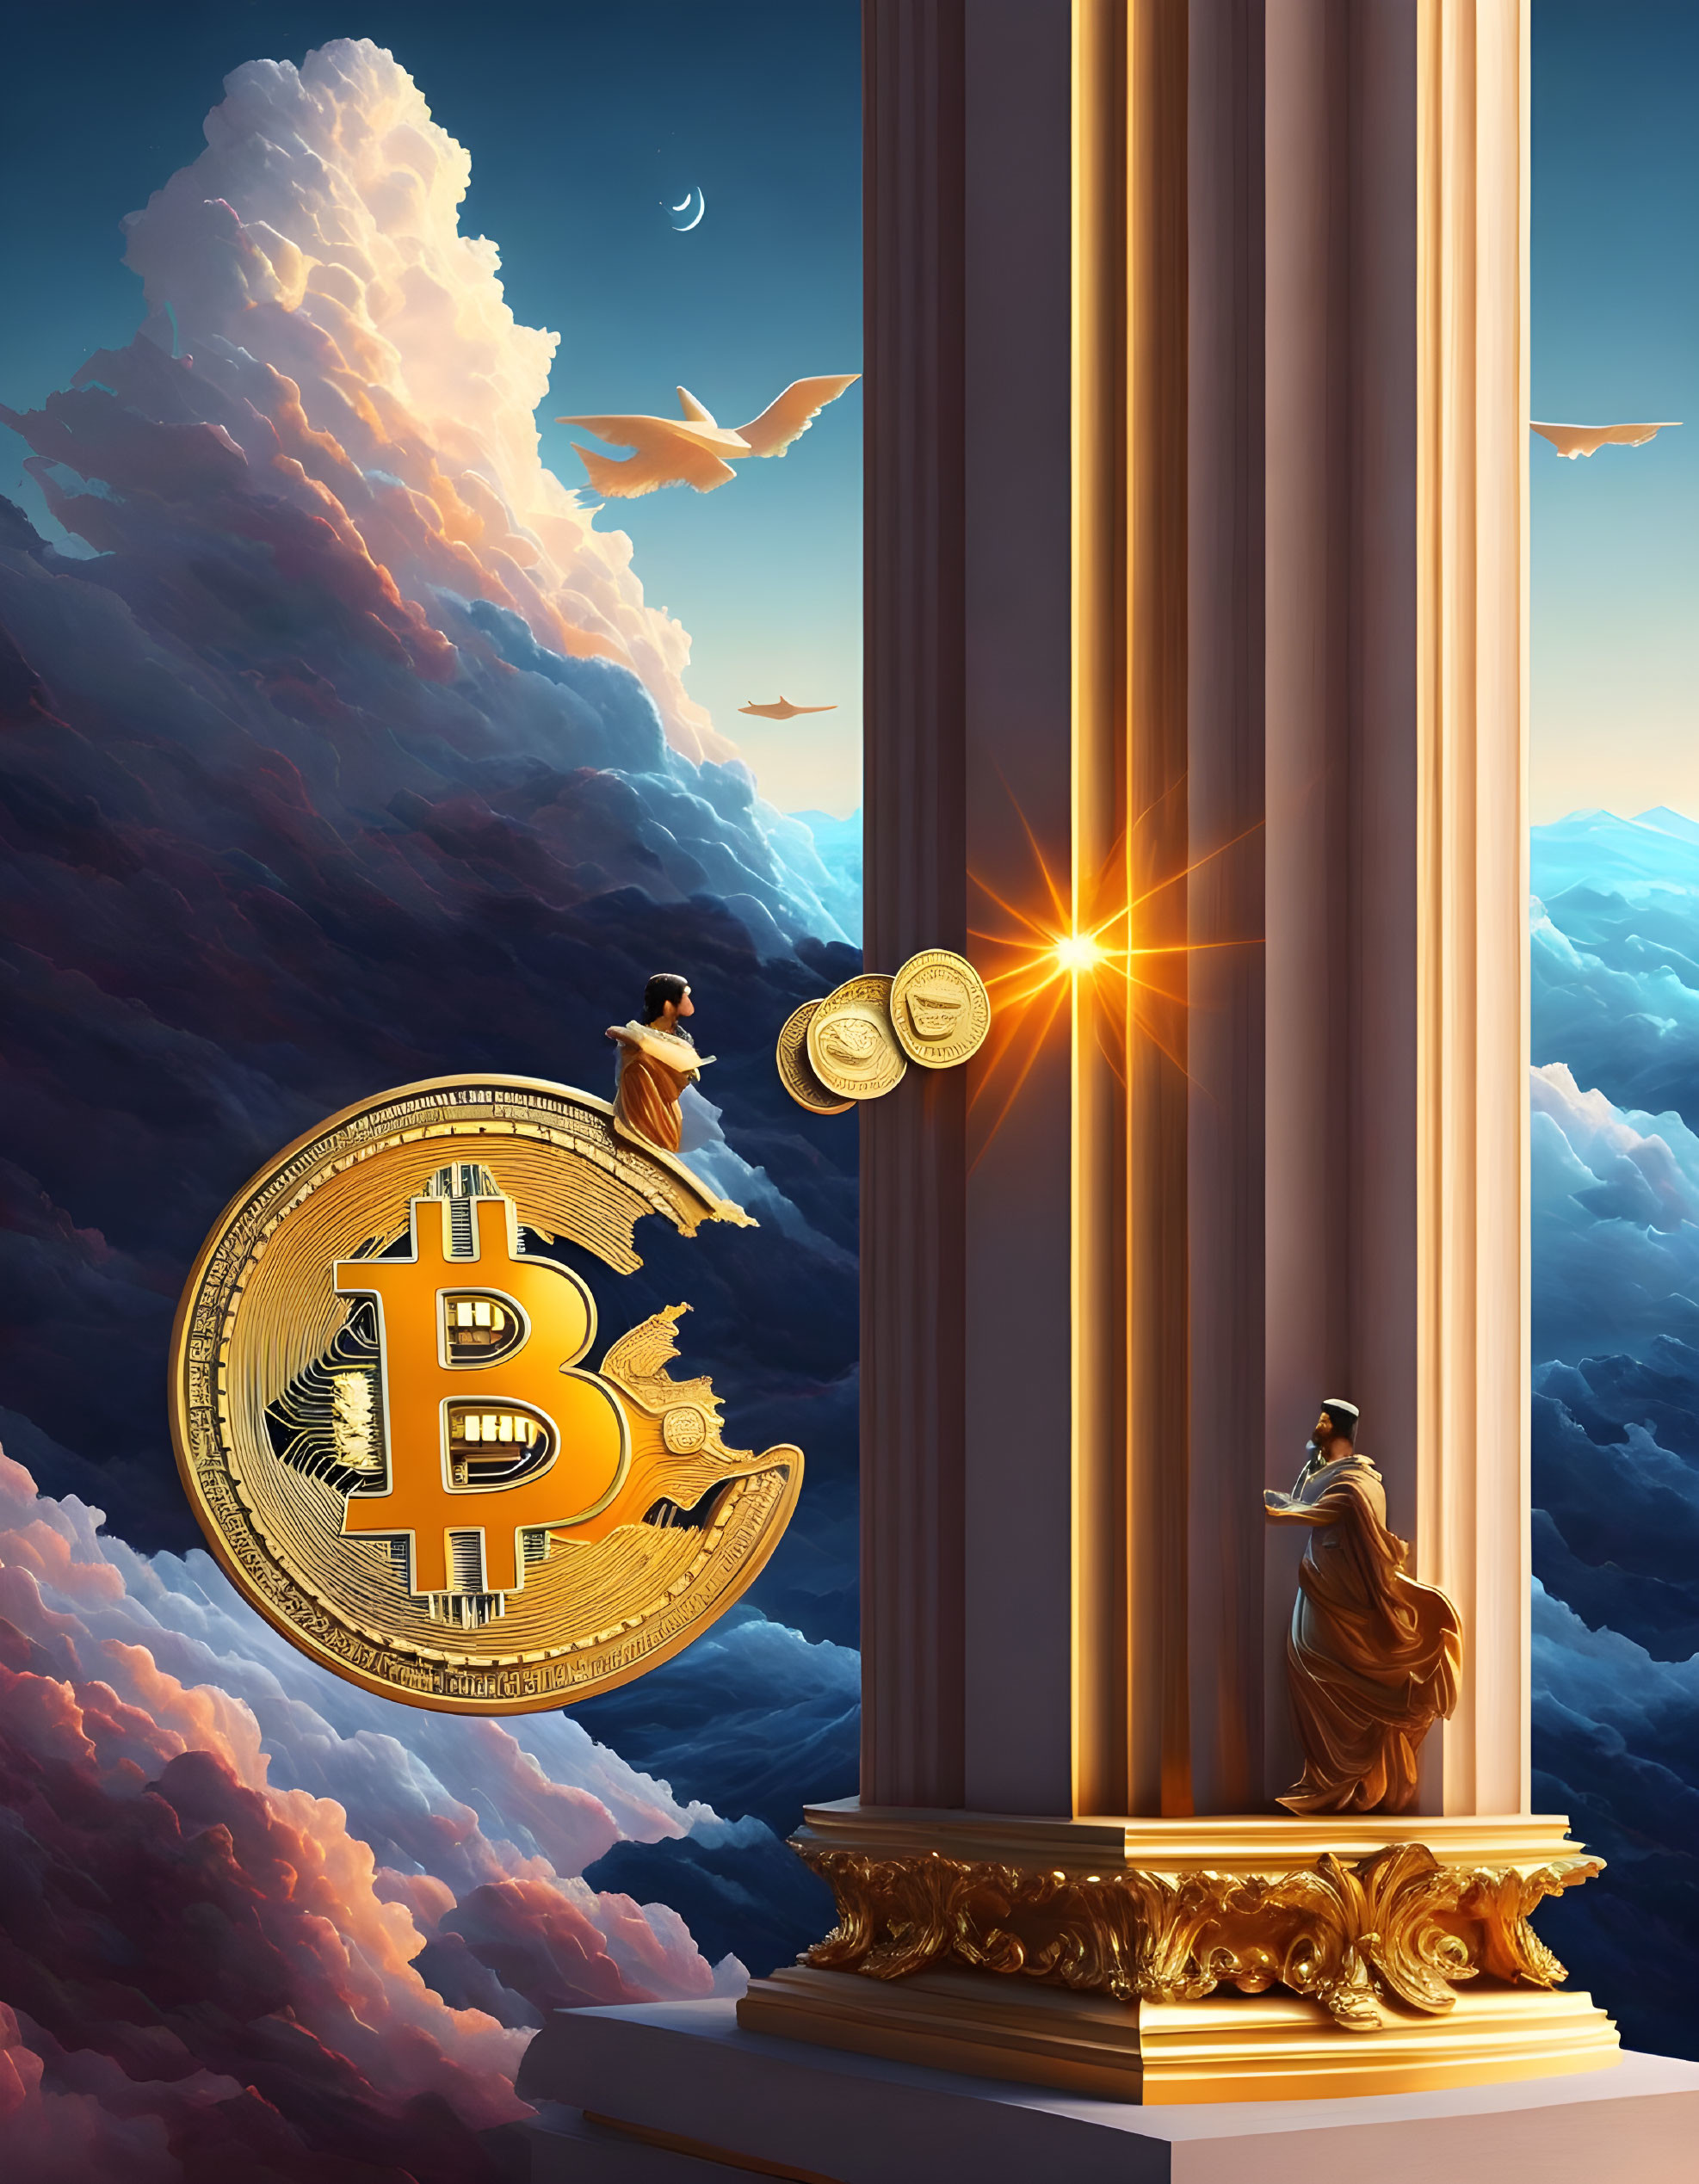 Digital artwork: Giant Bitcoin among classical pillars, robed figures, birds, clouds, crescent moon